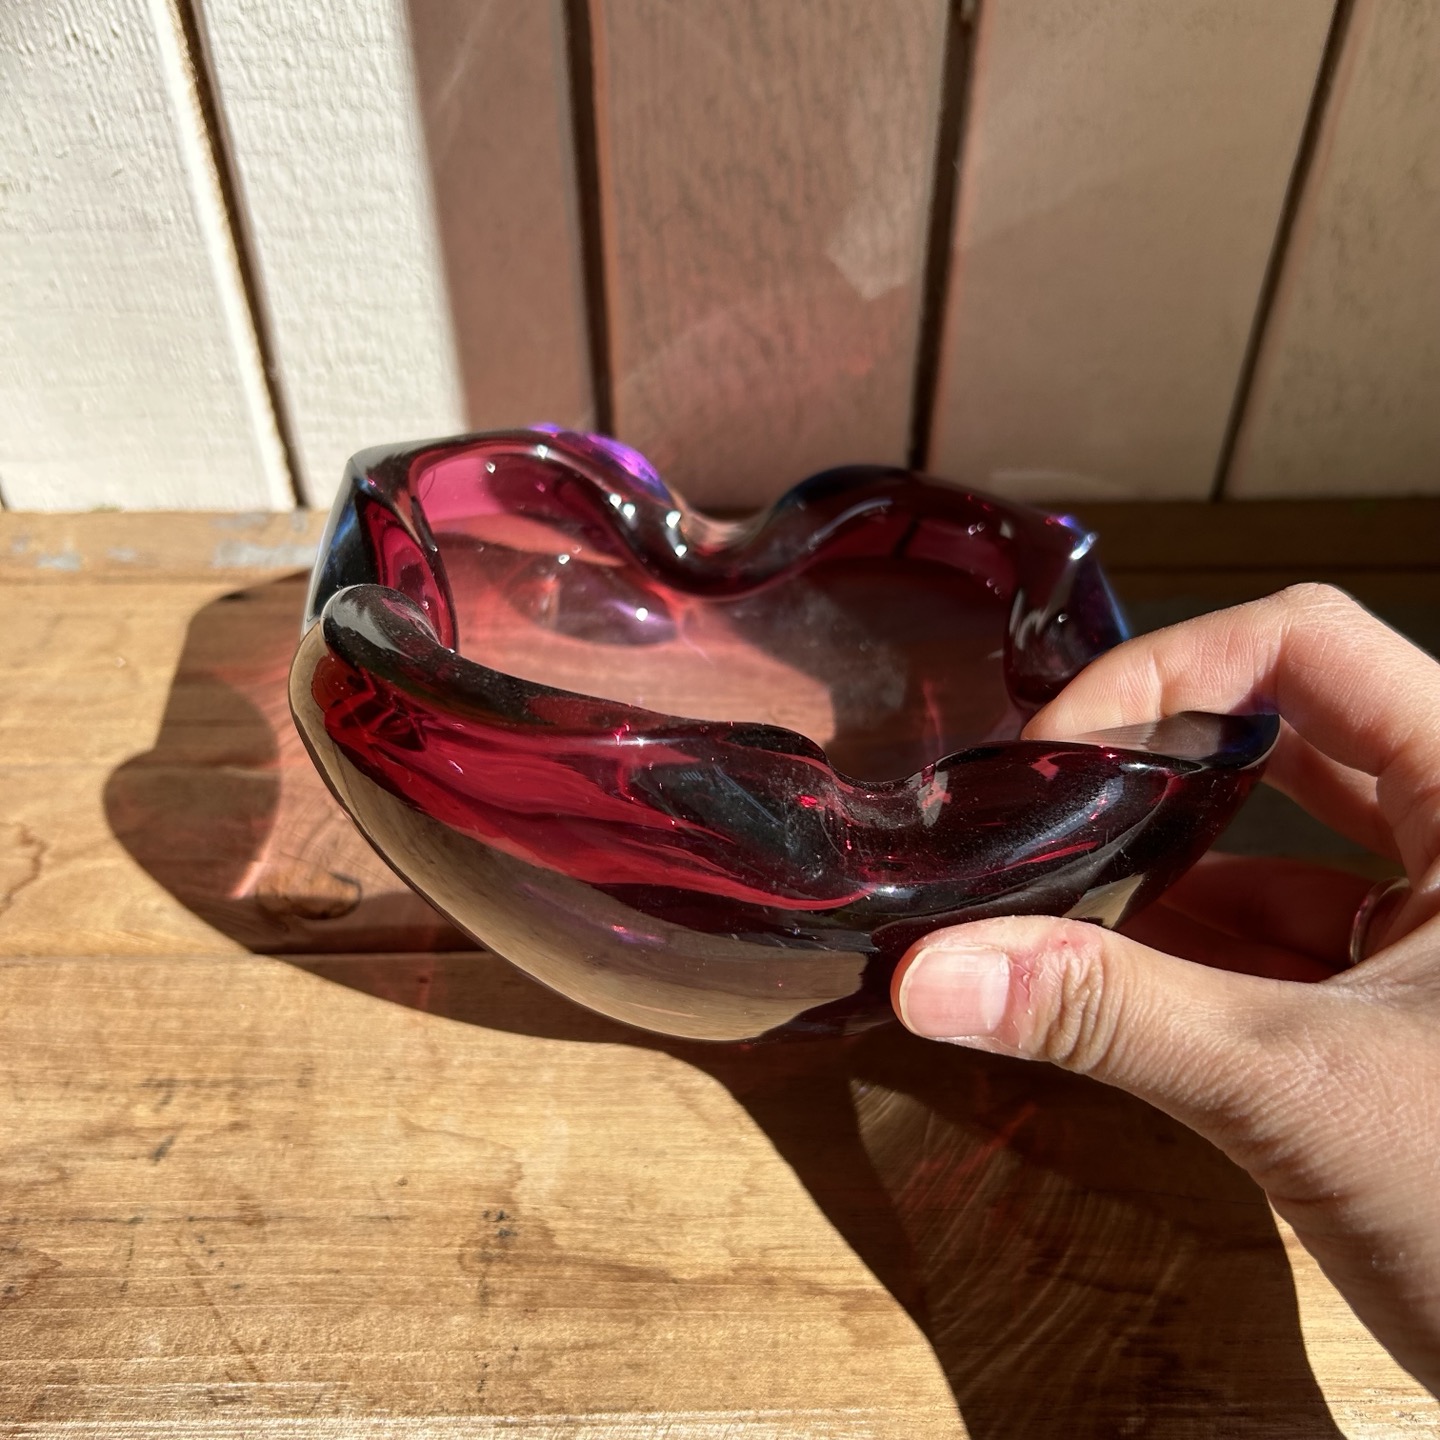 Vintage Glass Bowl